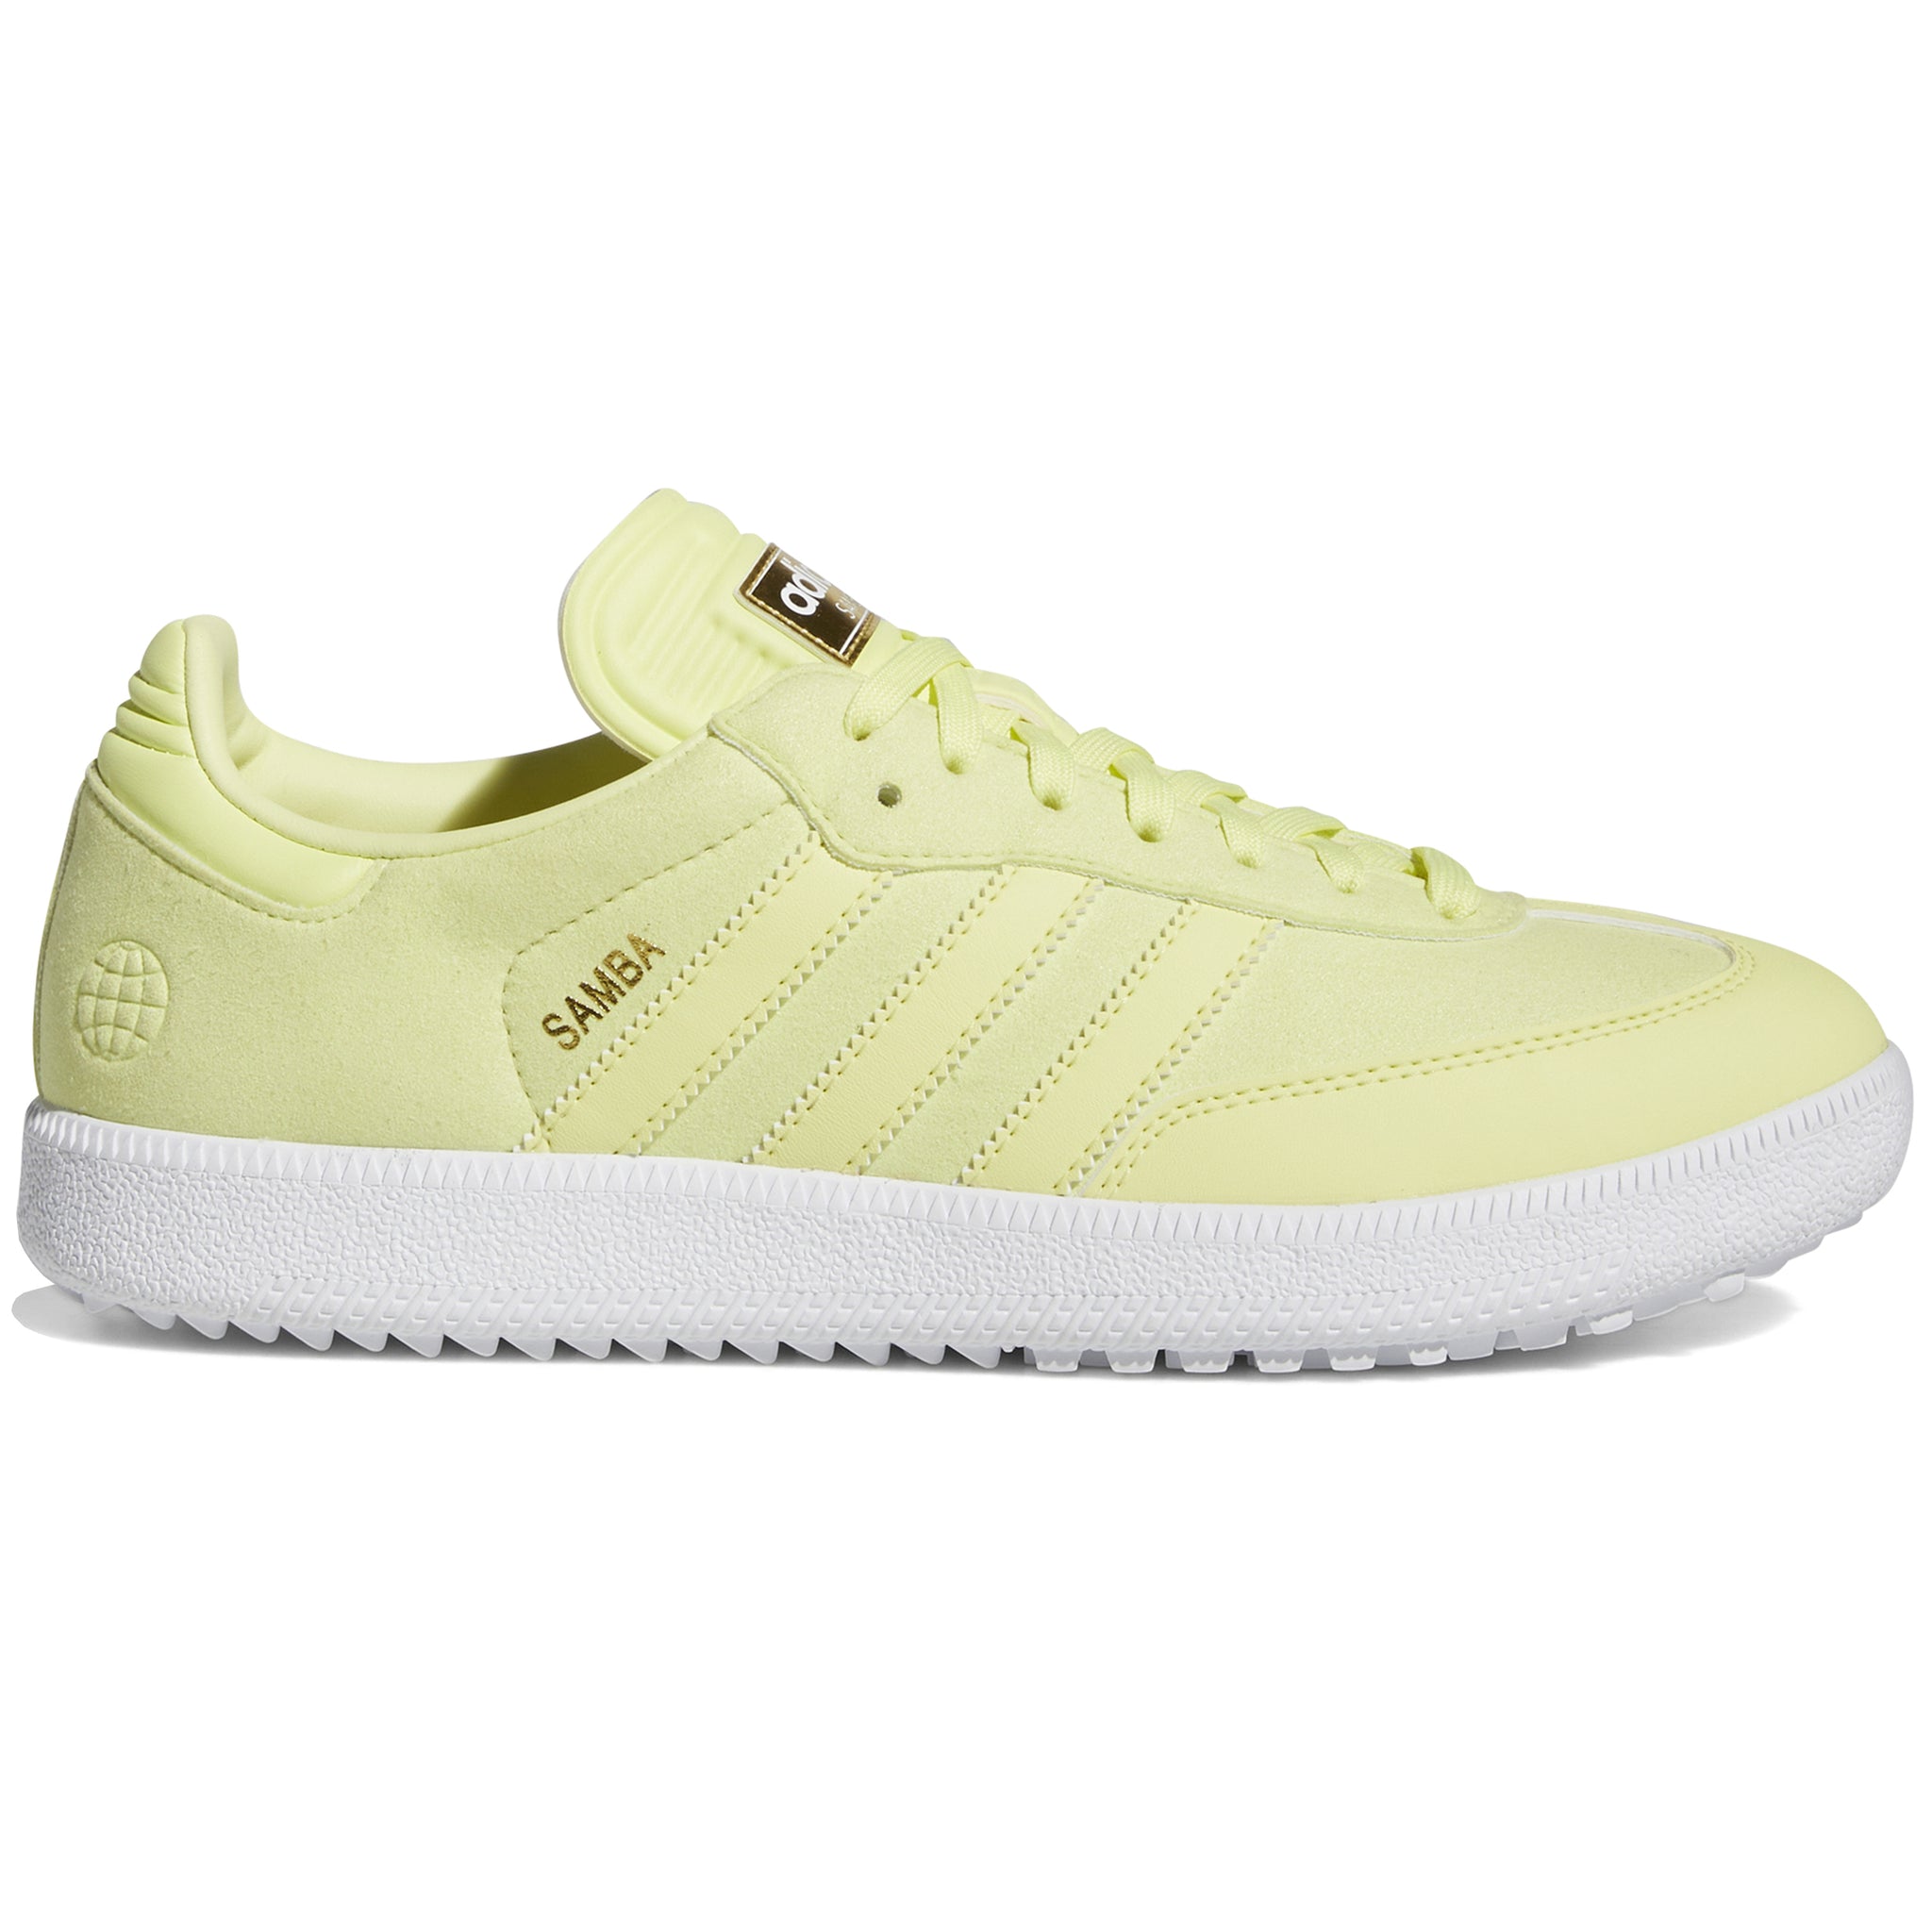 adidas-samba-spikeless-le-golf-shoes-hp7877-pulse-yellow-white